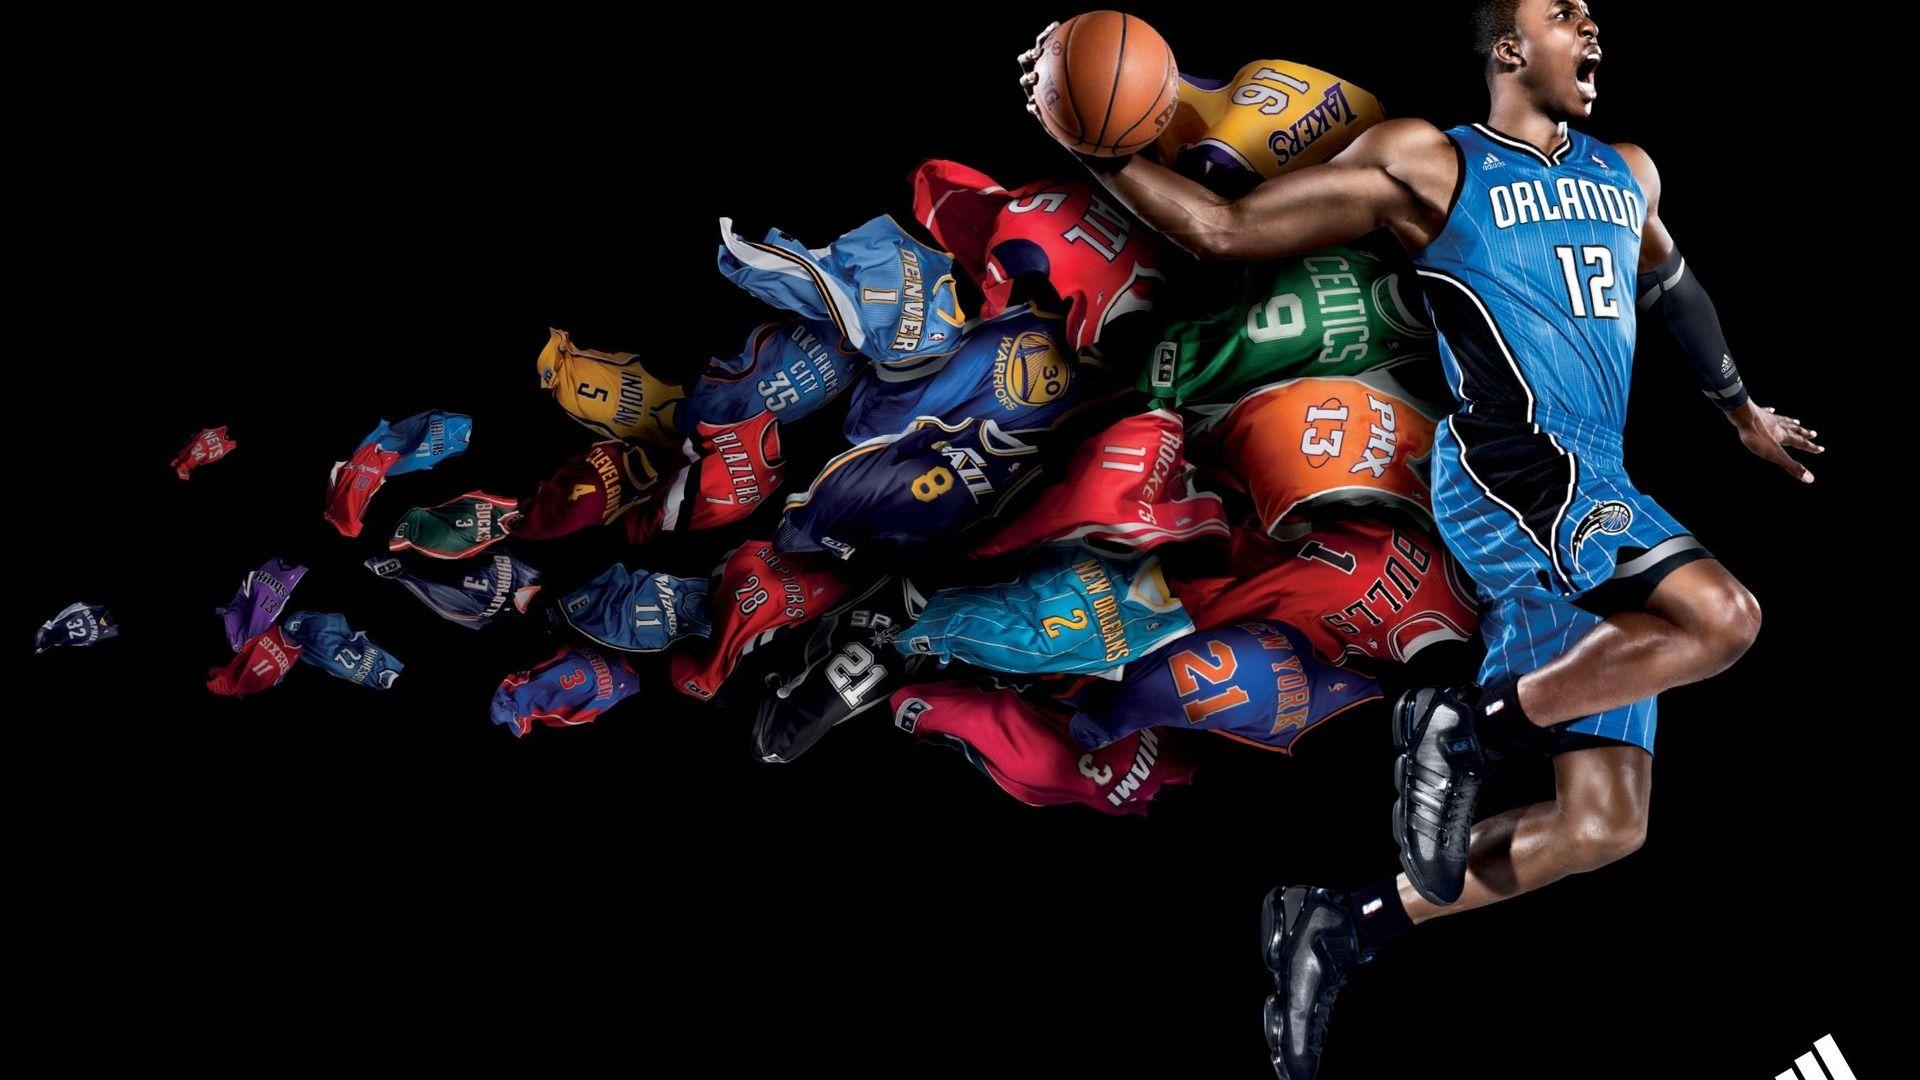 NBA Background Image Photos Pics